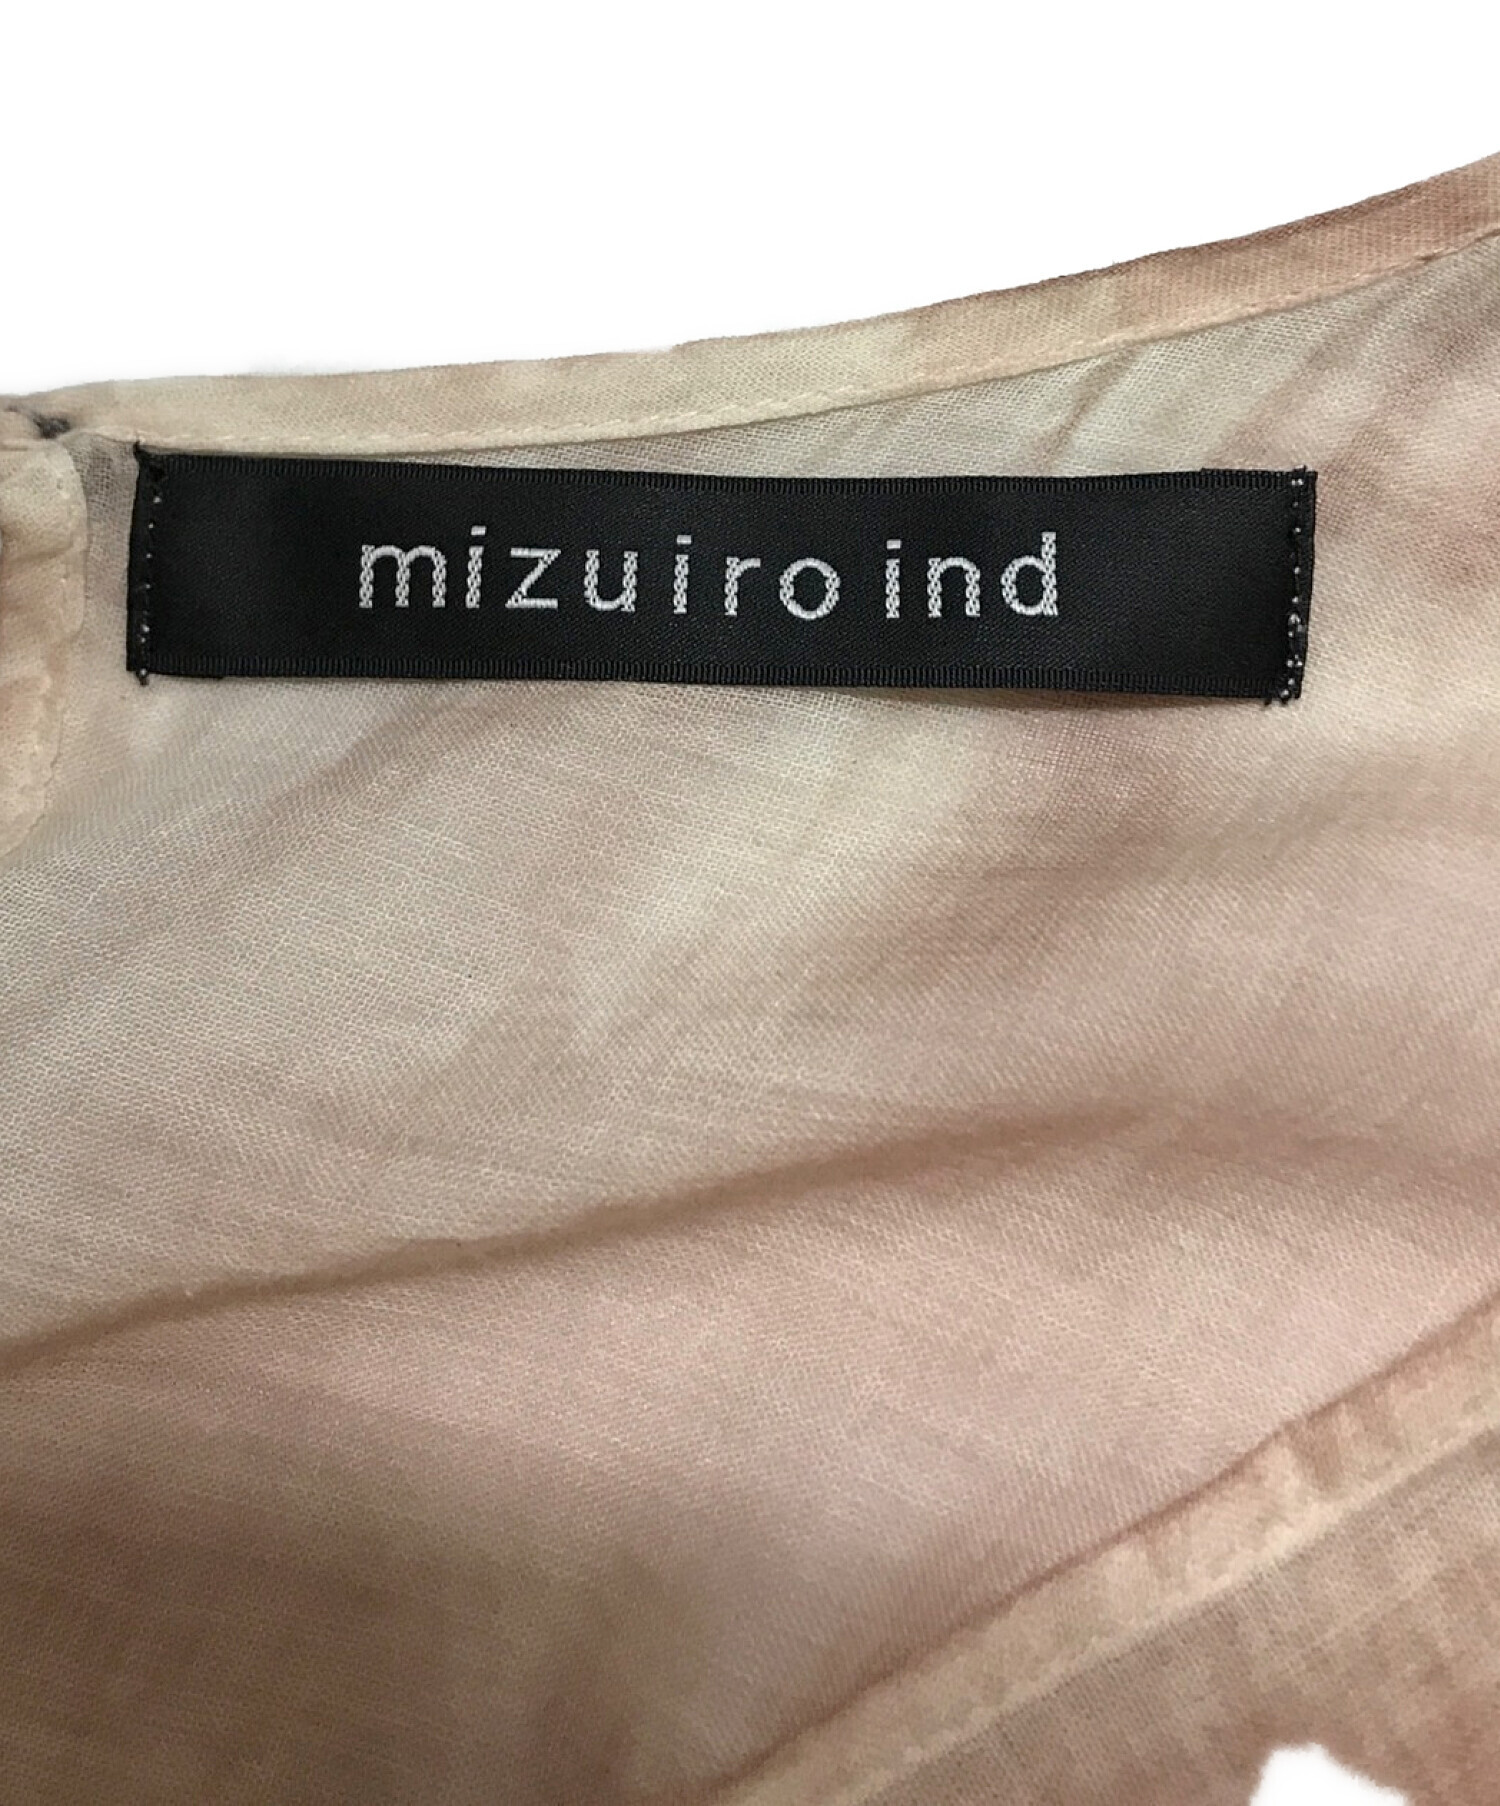 mizuiro-ind (ミズイロインド) ピグメントダイ ワイドギャザープルオーバー ピンク サイズ:SIZE Free